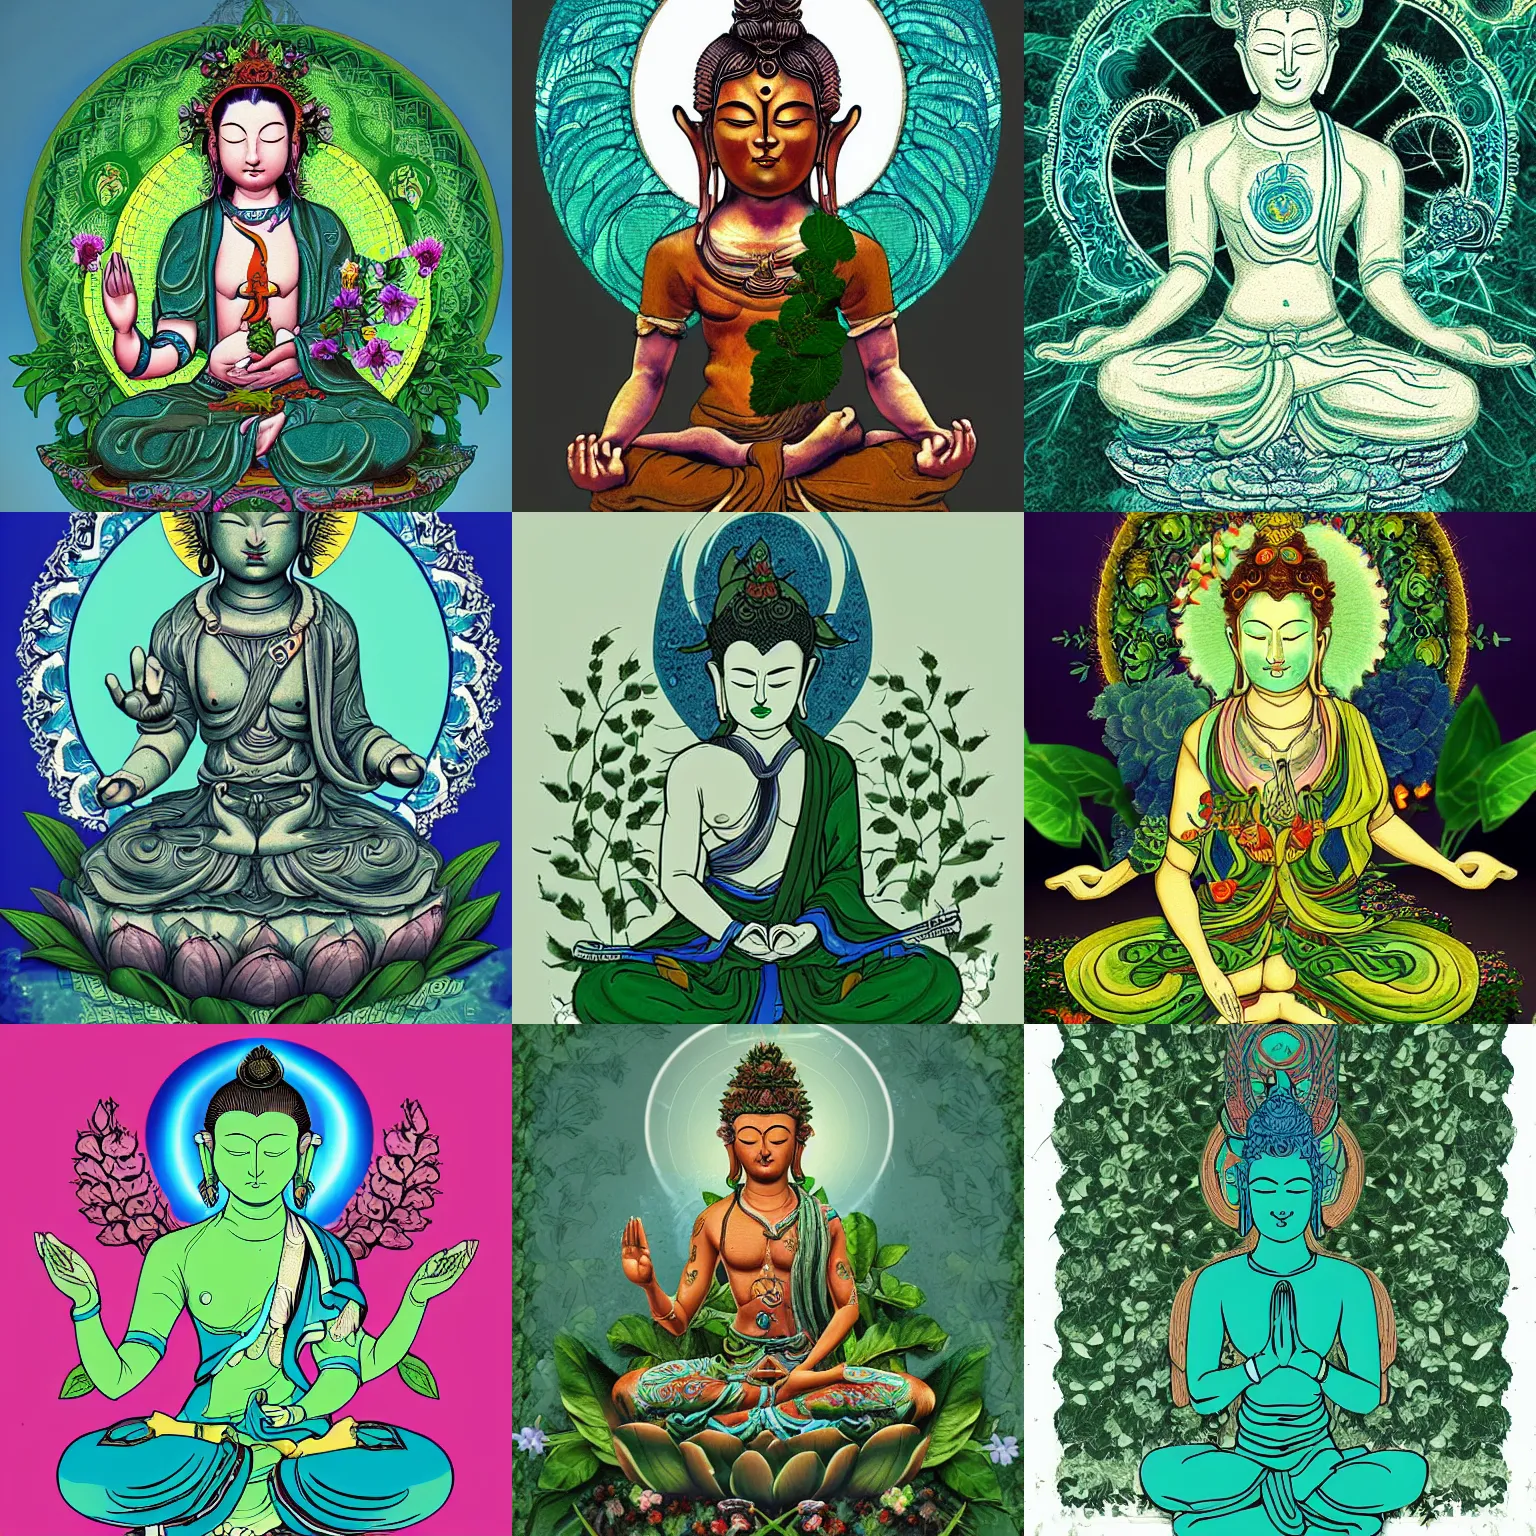 Prompt: peaceful content gardenpunk bodhisattva, praying meditating, greens and blues, intricate clothing, WLOP digital art artstation